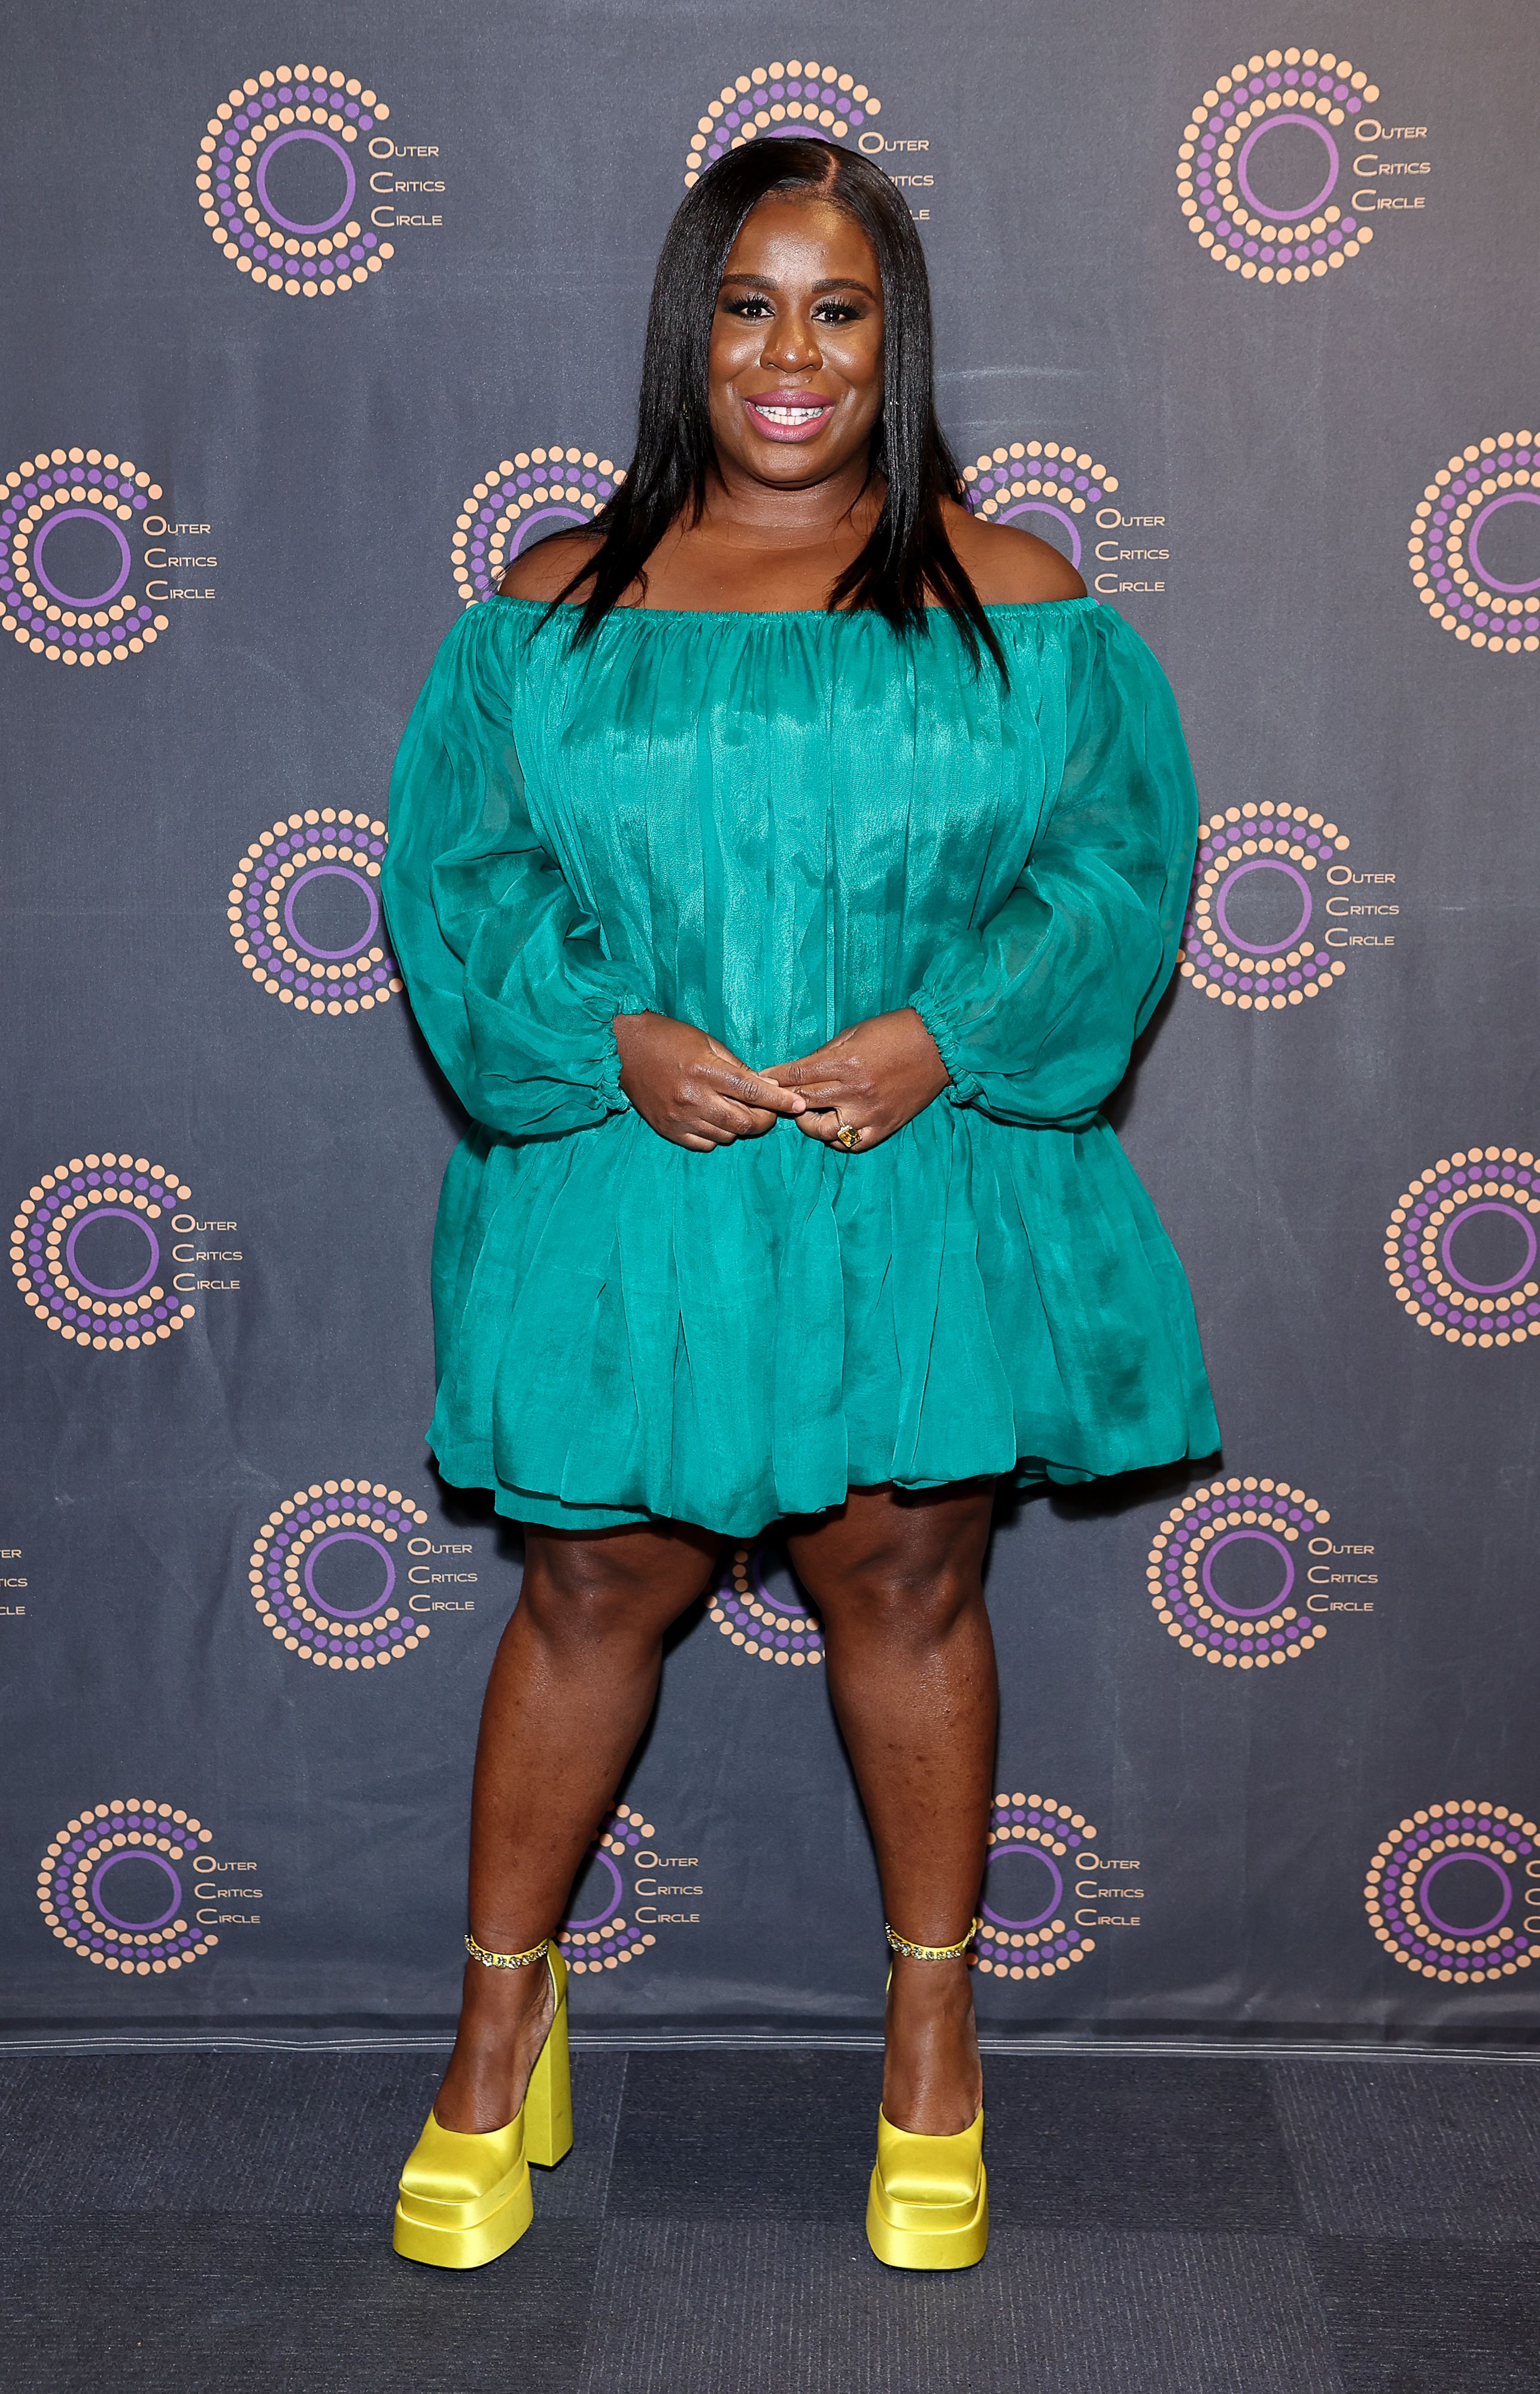 Uzo Aduba at a media event in a short dress and platform heels